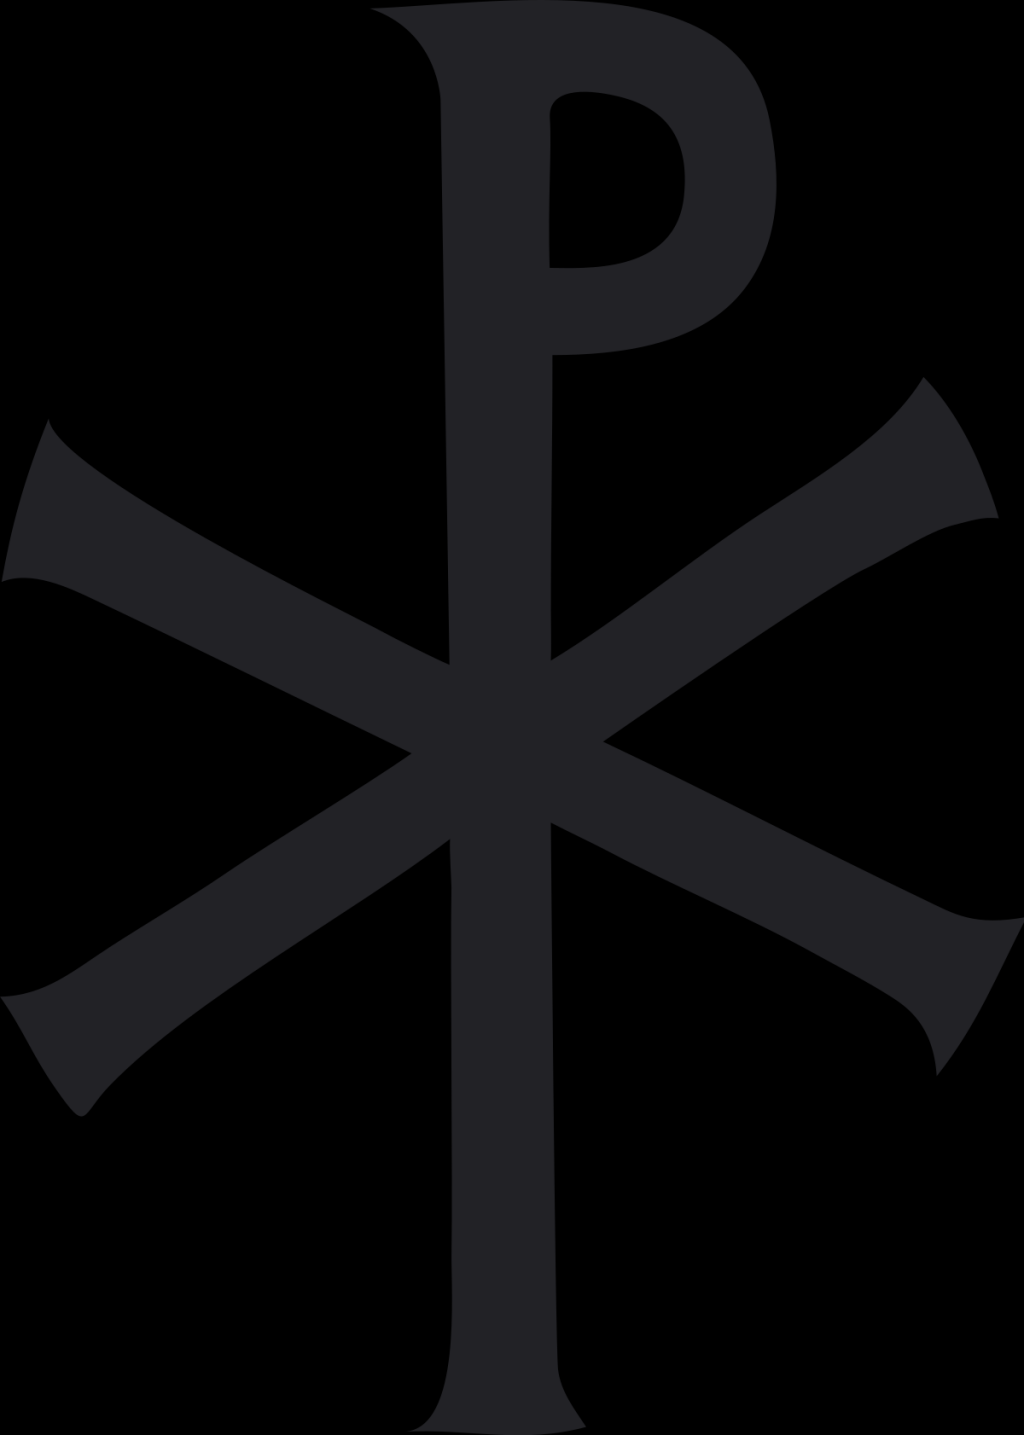 Picture of: Christogram – Wikipedia